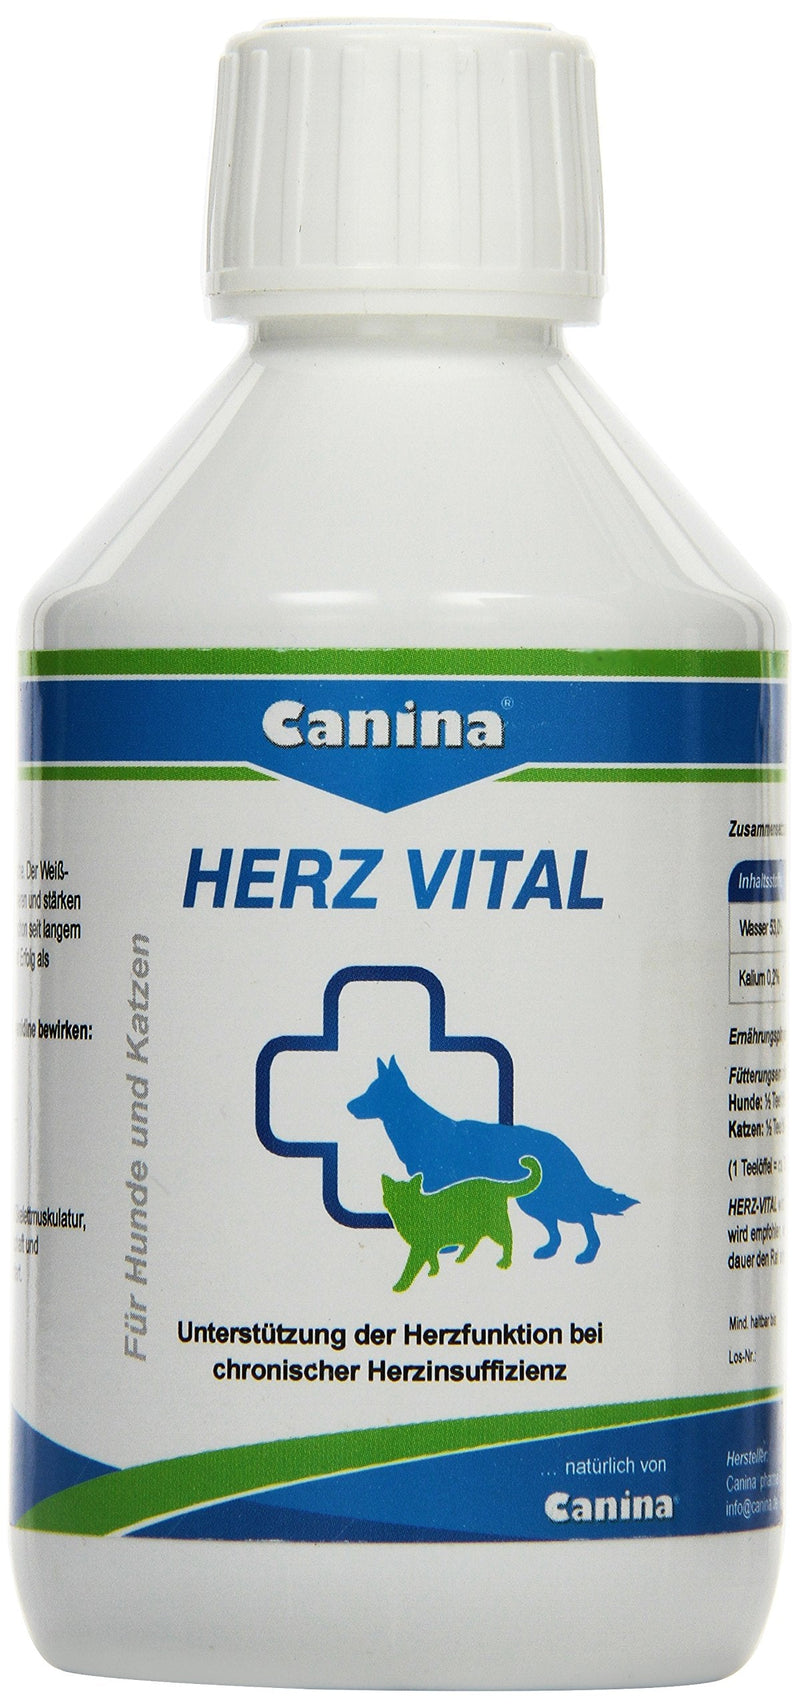 Canina Heart Vital, pack of 1 (1 x 250 ml) - PawsPlanet Australia